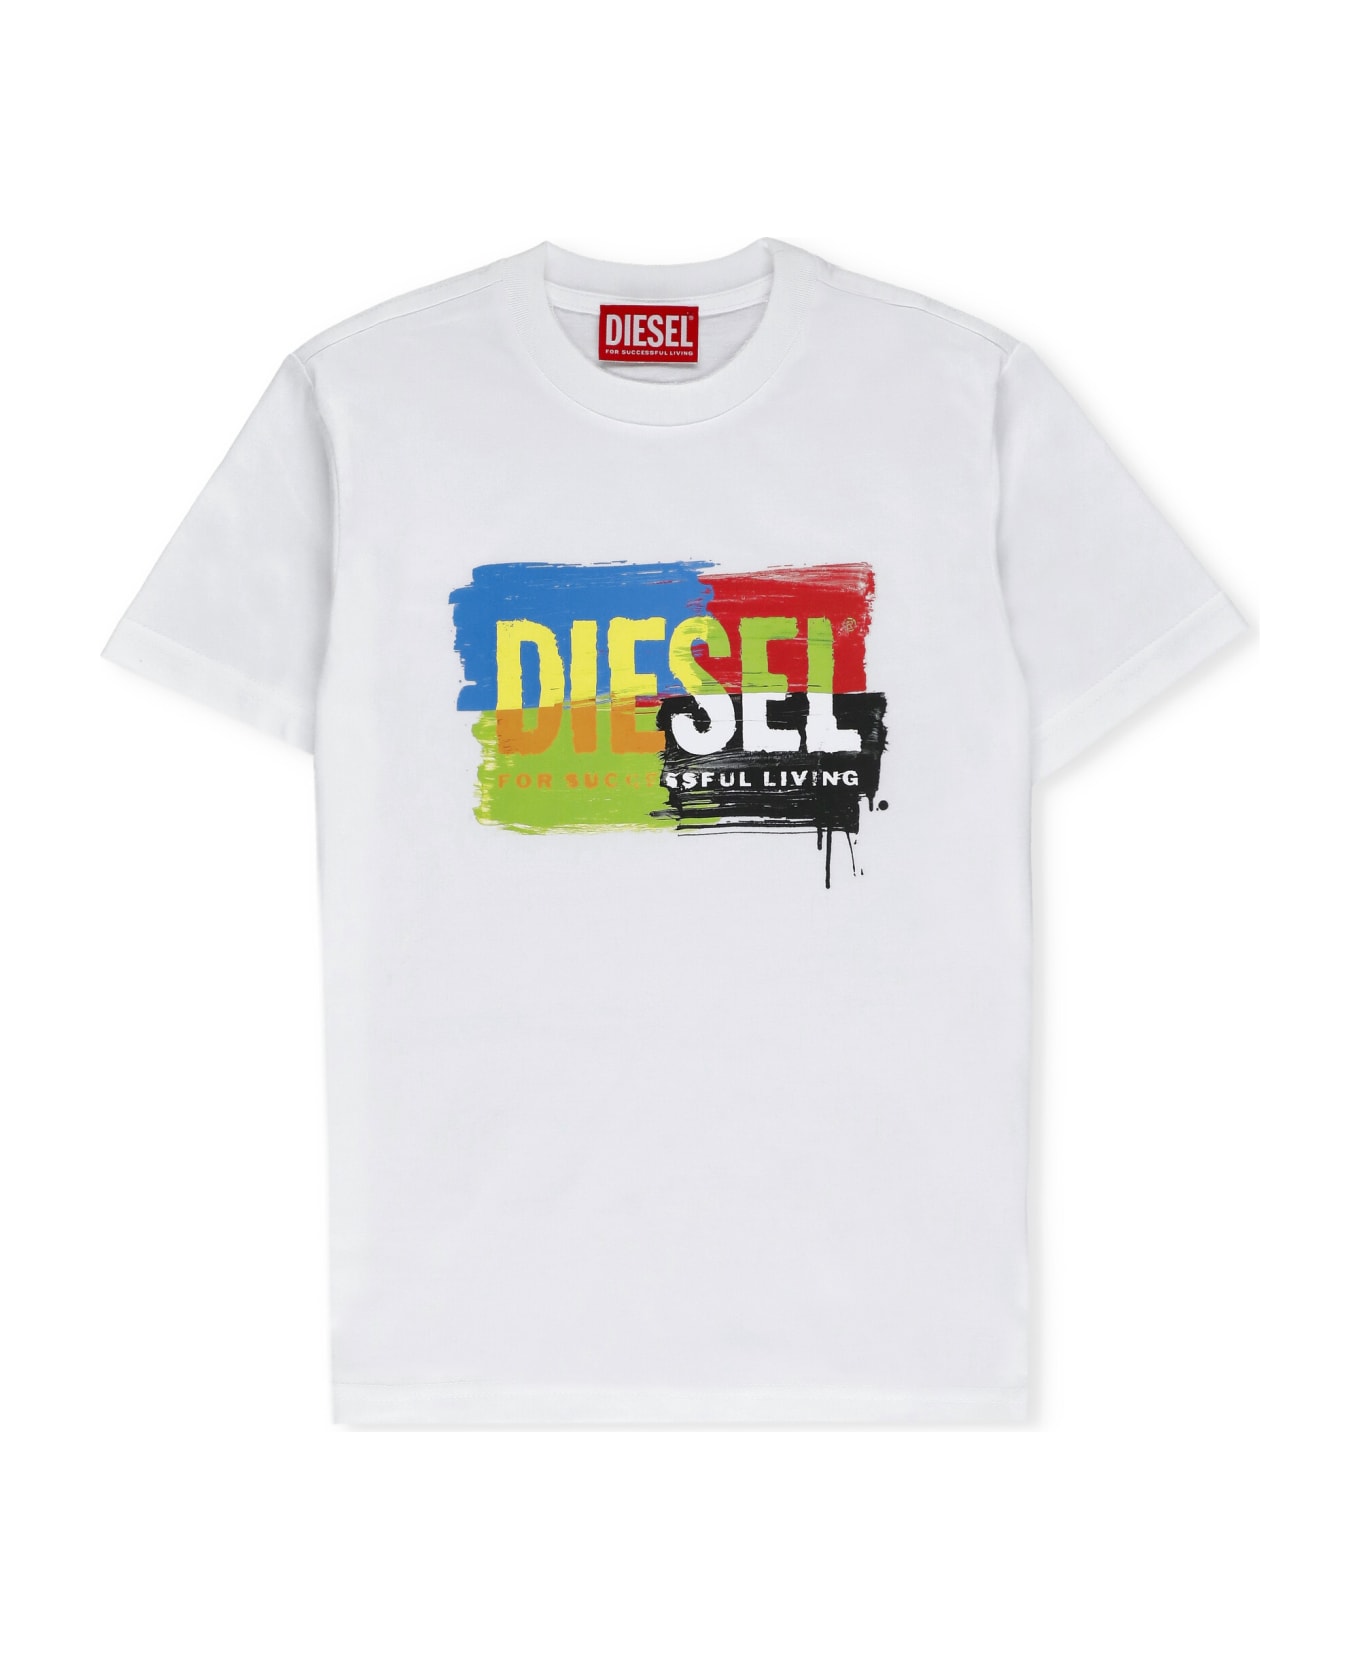 Diesel Tkand T-shirt - White